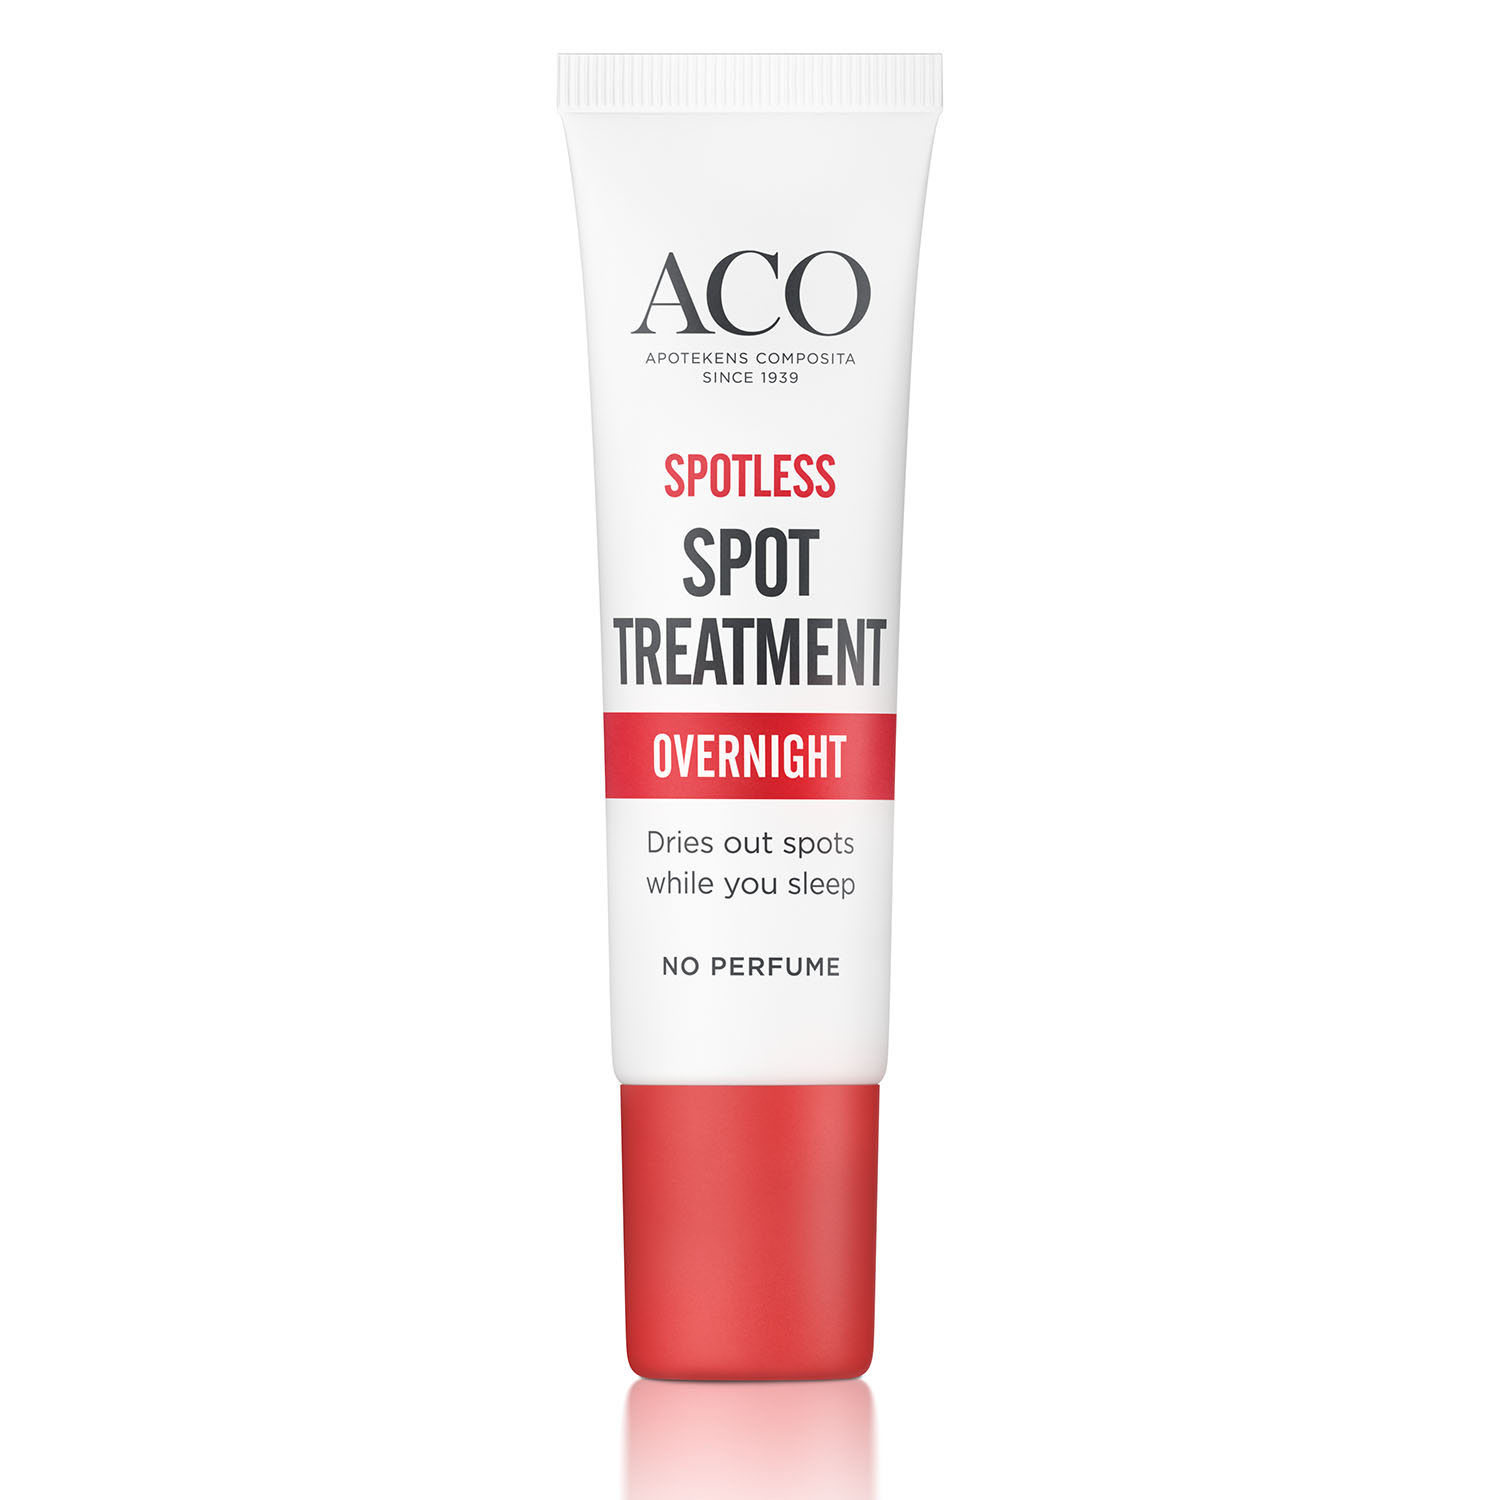 ACO Spotless Spot Treatment Overnight up, 10 ml